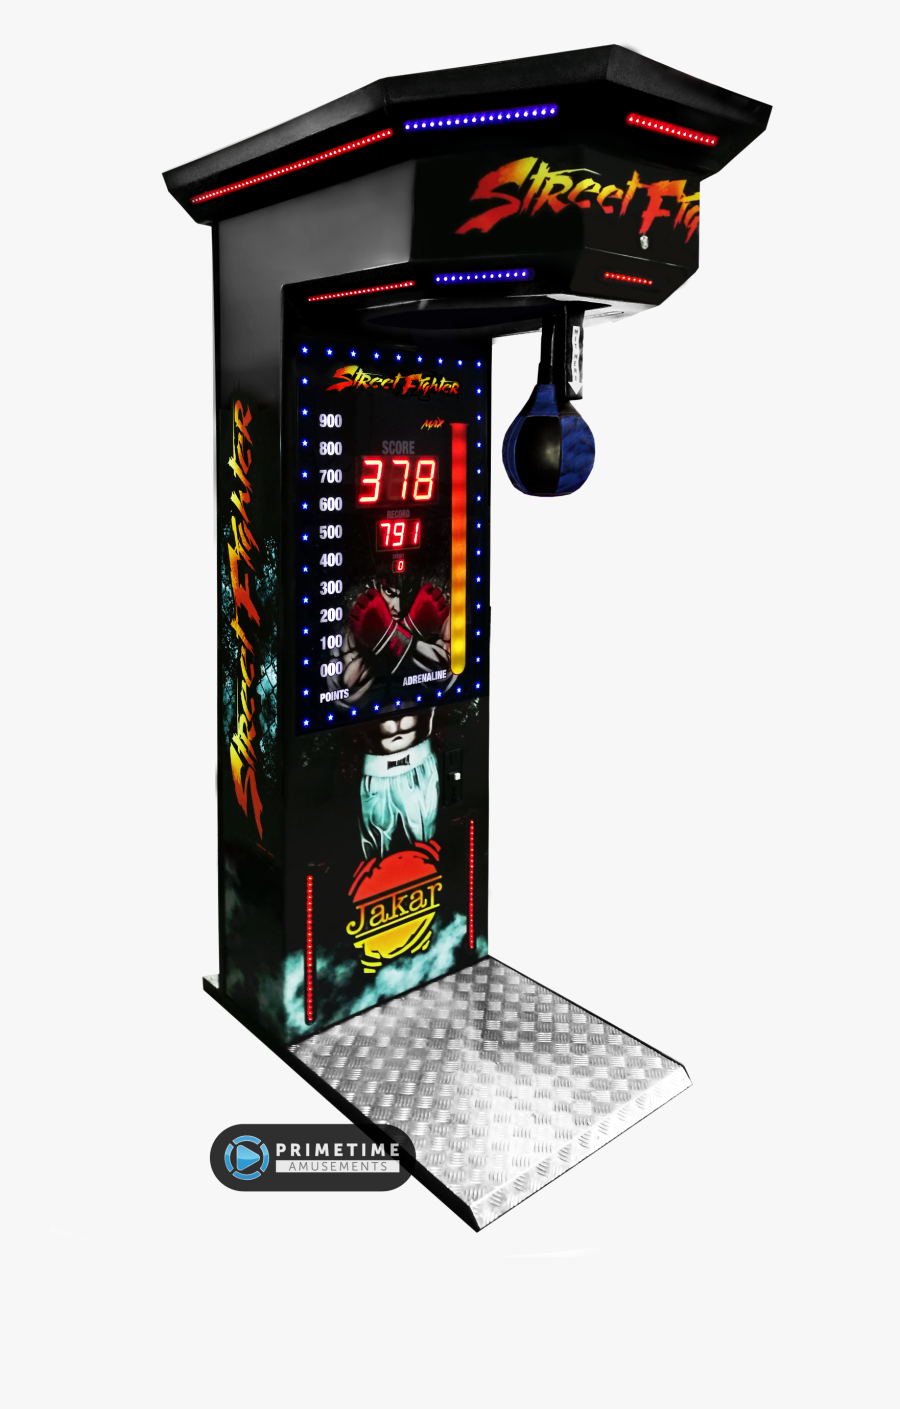 Boxer Street Fighter Arcade Machine - Punching Bag Arcade, Transparent Clipart